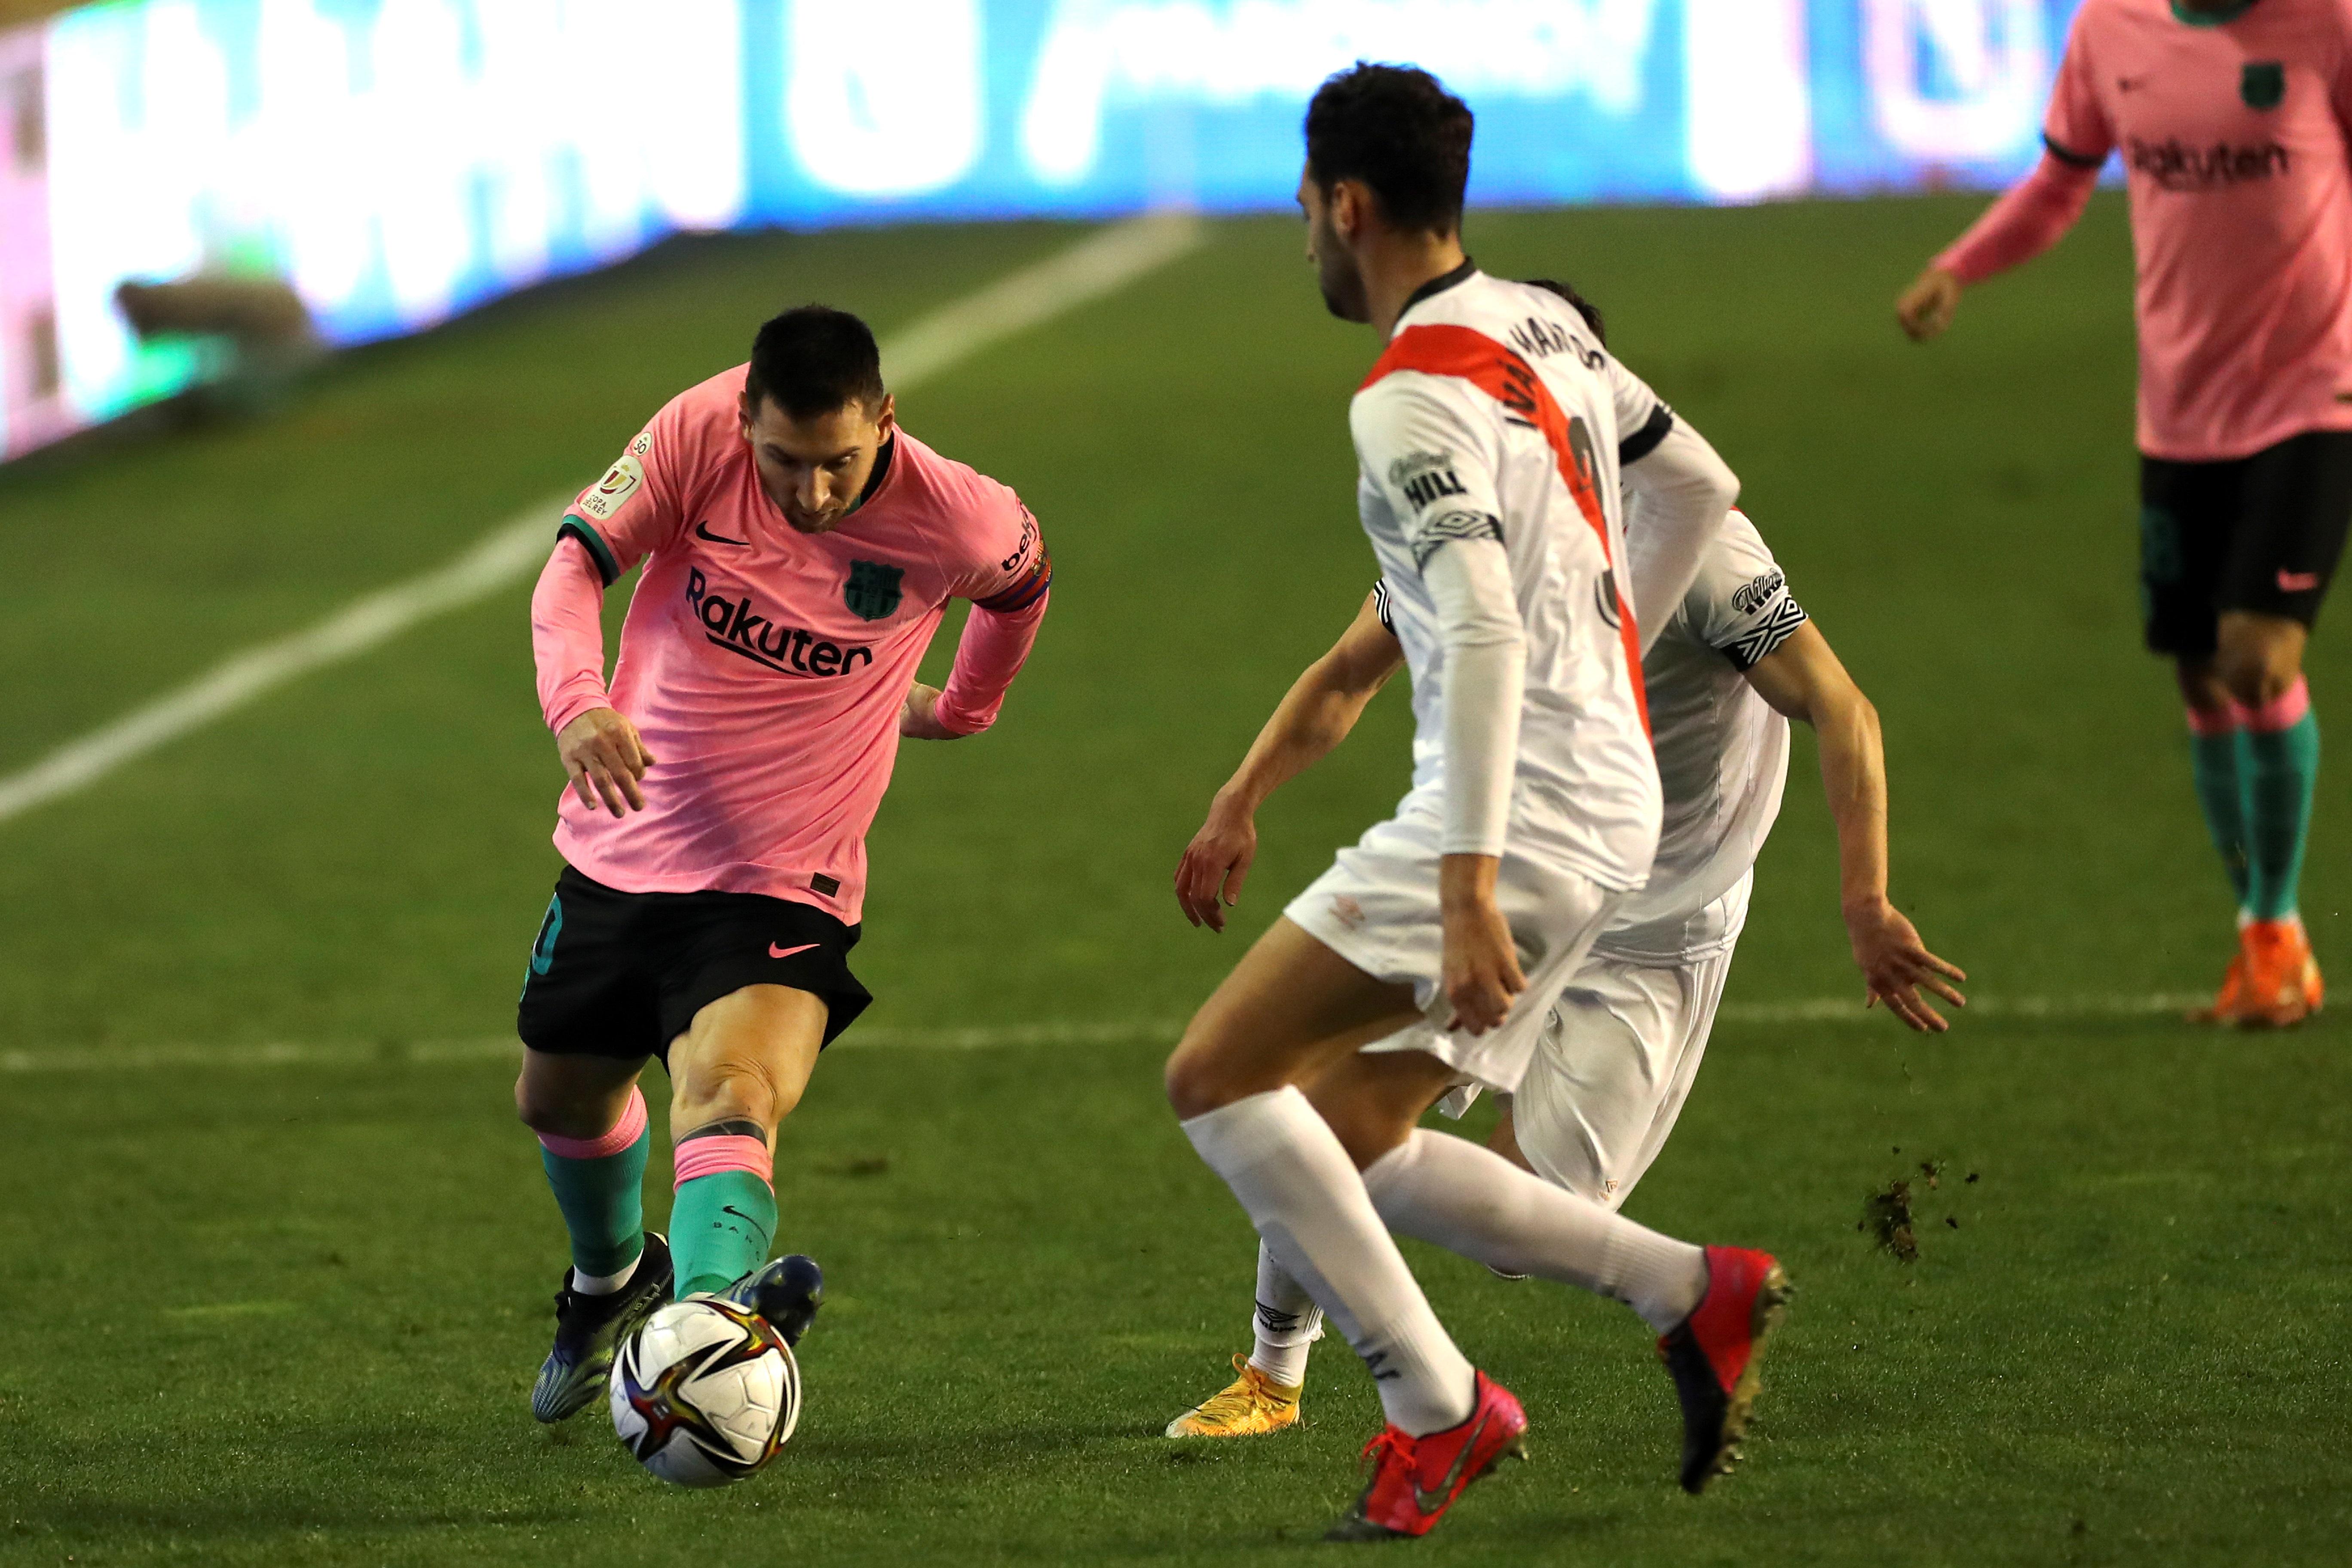 El delantero argentino del FC Barcelona, Leo Messi marcó el gol de la victoria. Foto Prensa Libre: EFE.